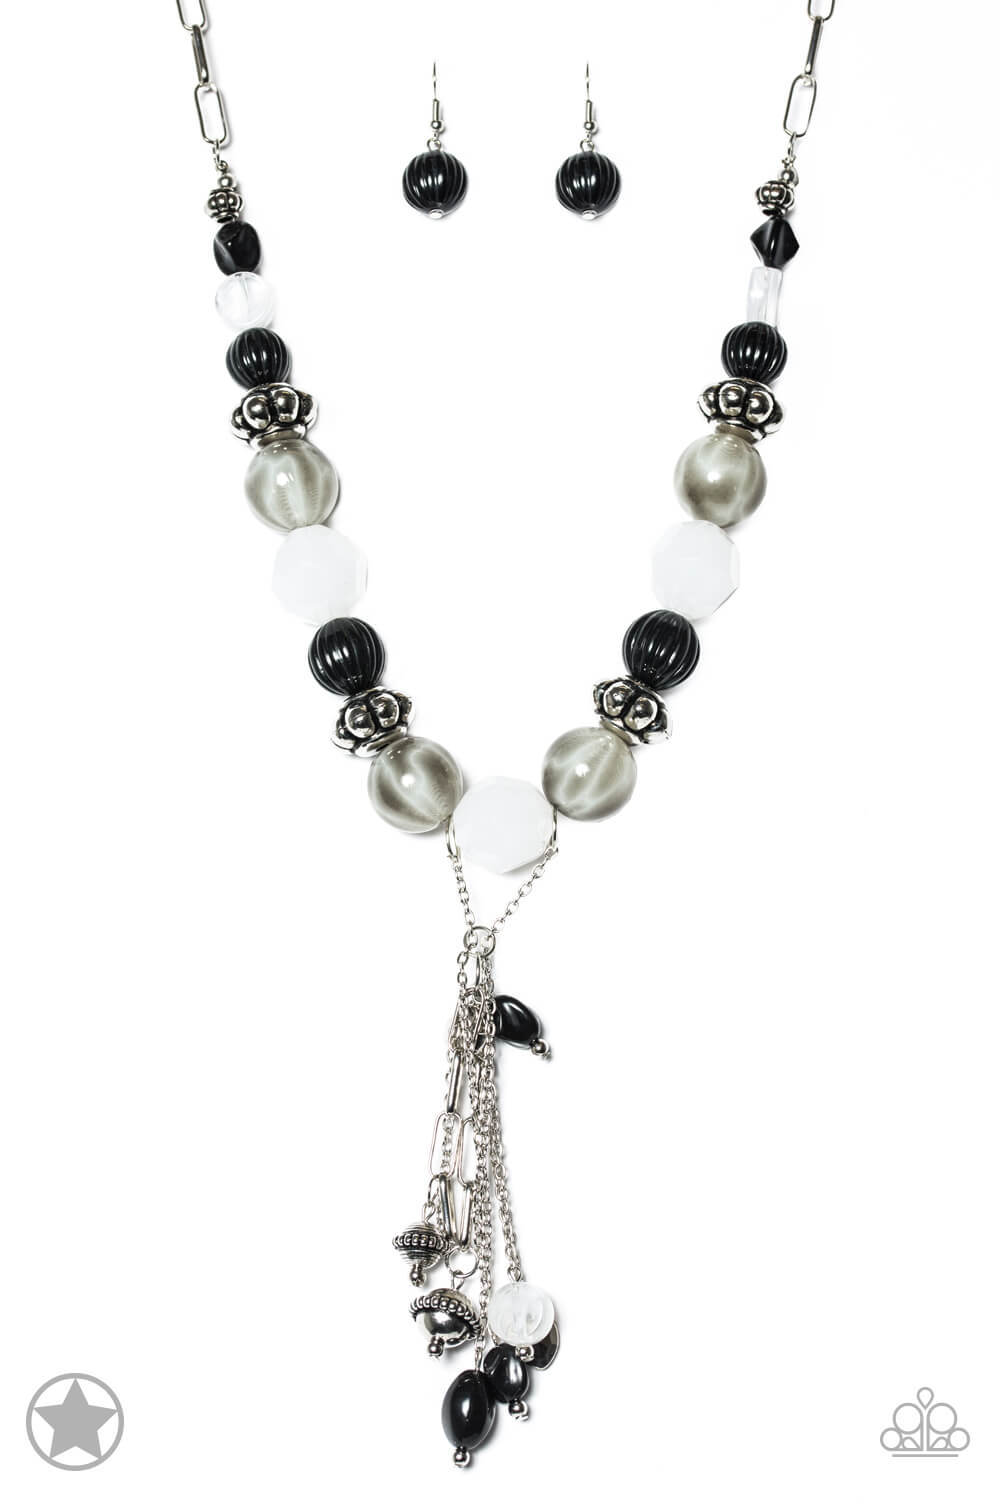 Break A Leg! Black & Silver Necklace Set - Princess Glam Shop